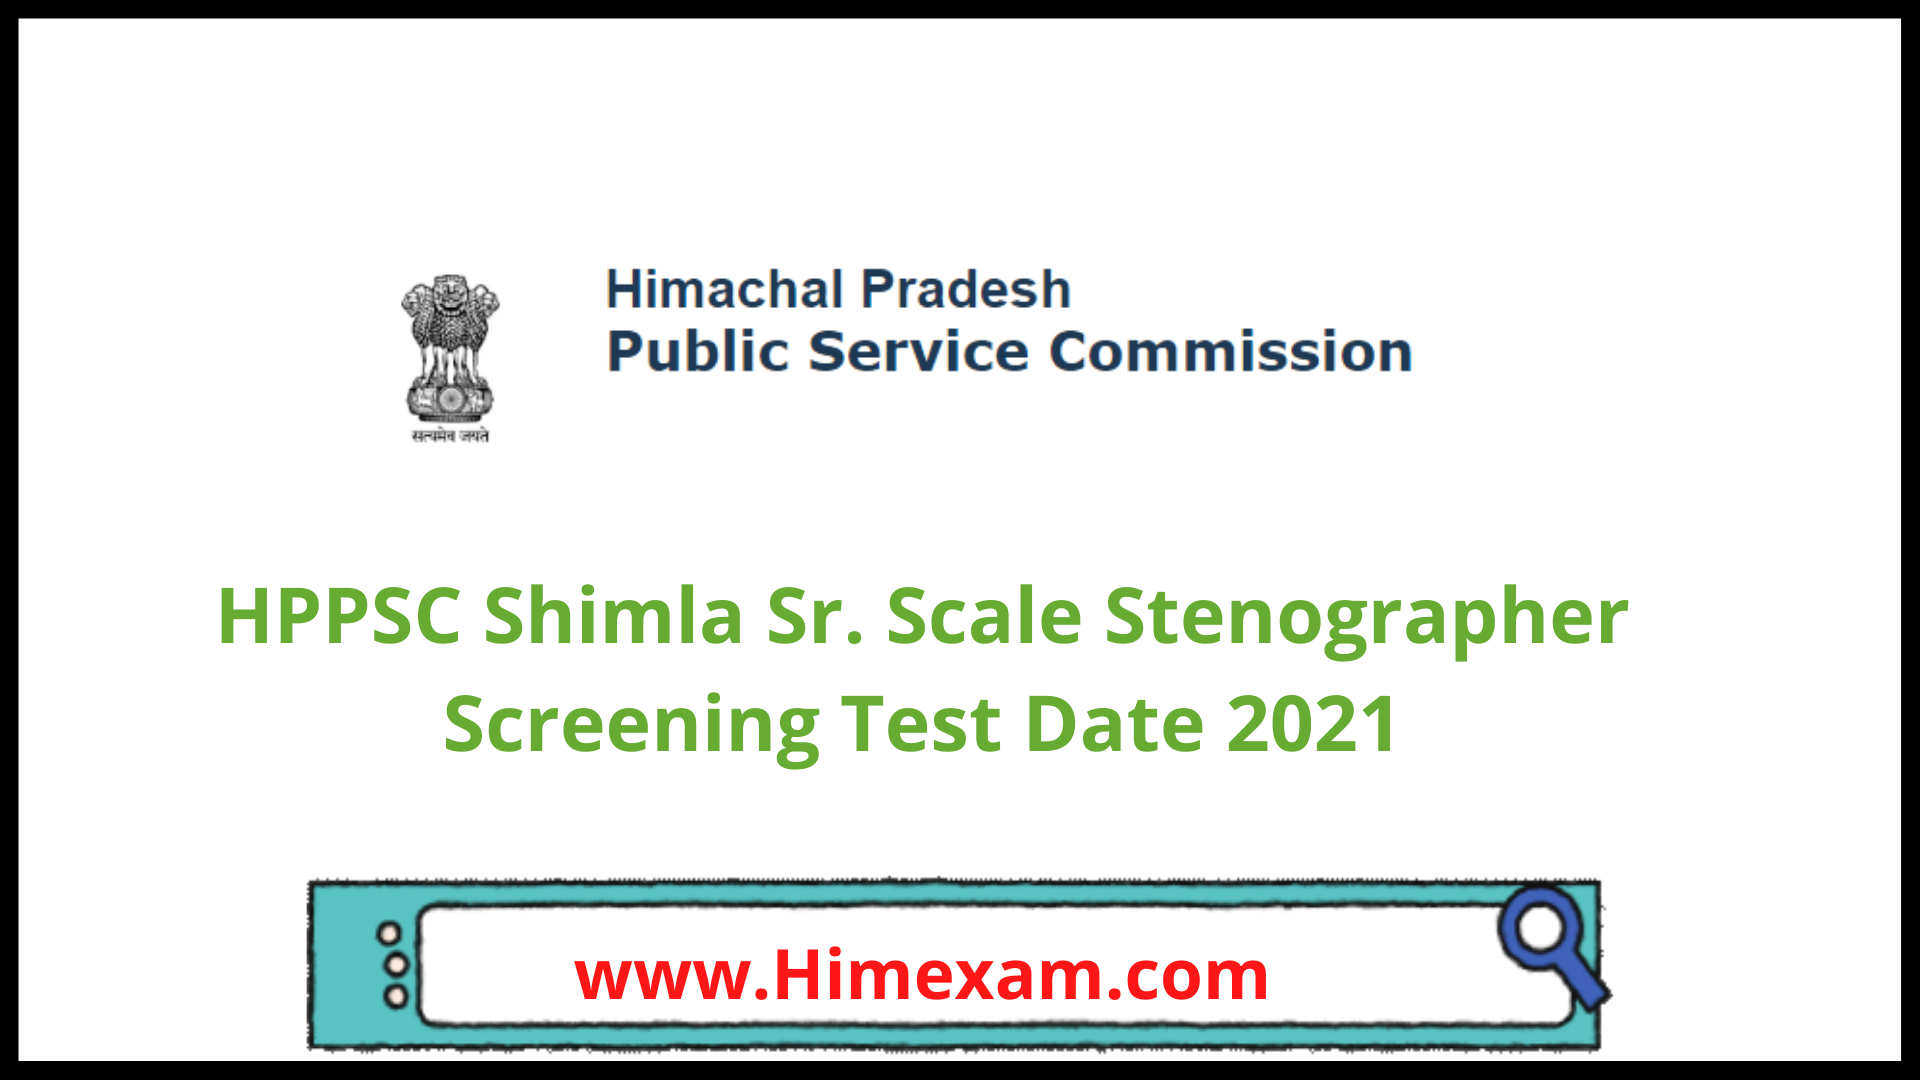 HPPSC Shimla Sr. Scale Stenographer Screening Test Date 2021